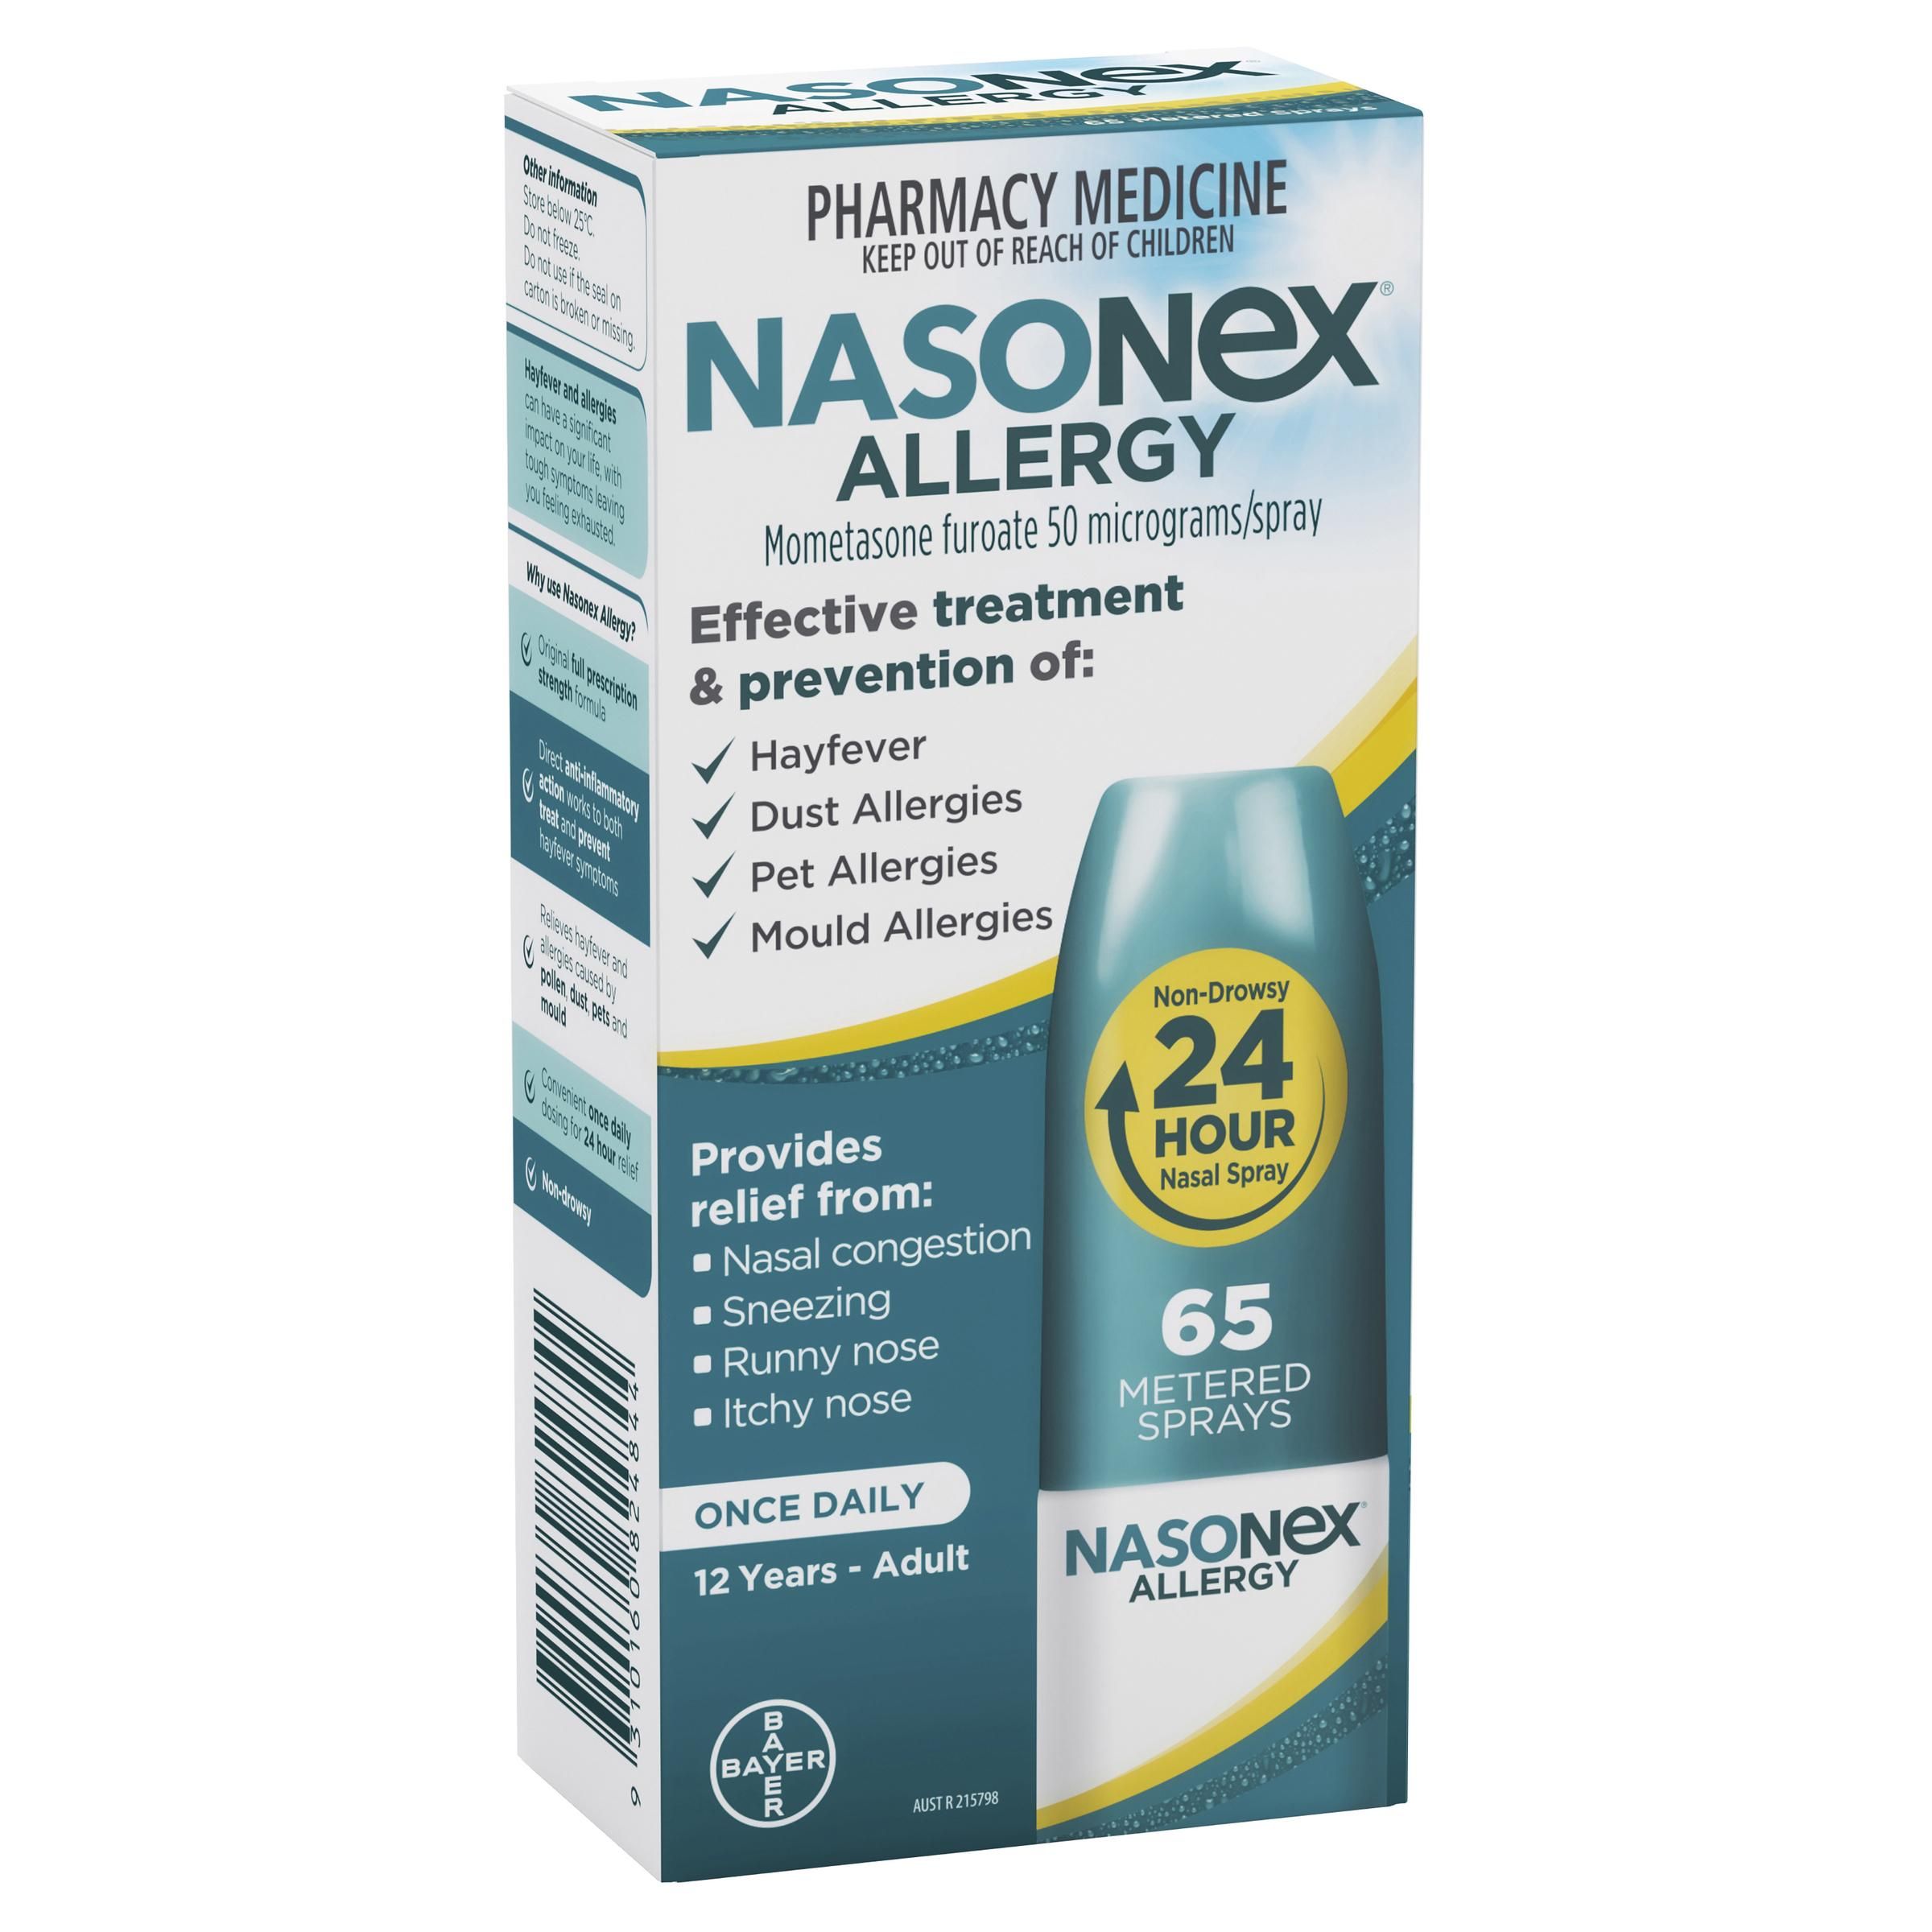 Nasonex 24HR Allergy Nasal Spray, Non-Drowsy, Scent-Free Mist, 60 Spray  Count 